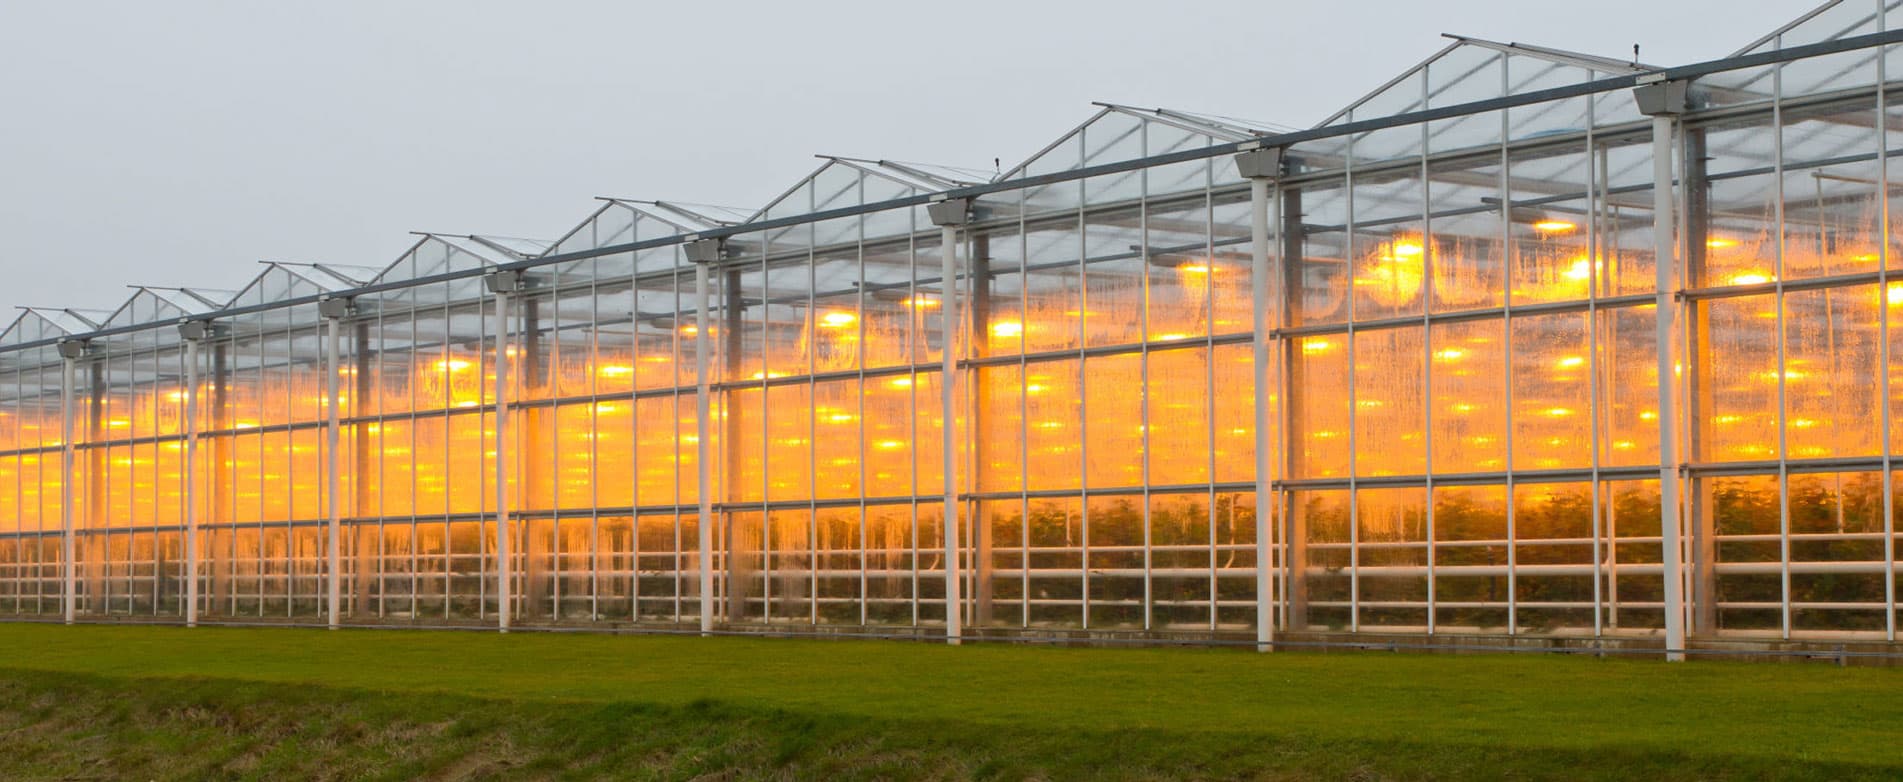 Led Grow Lights para agricultura vertical